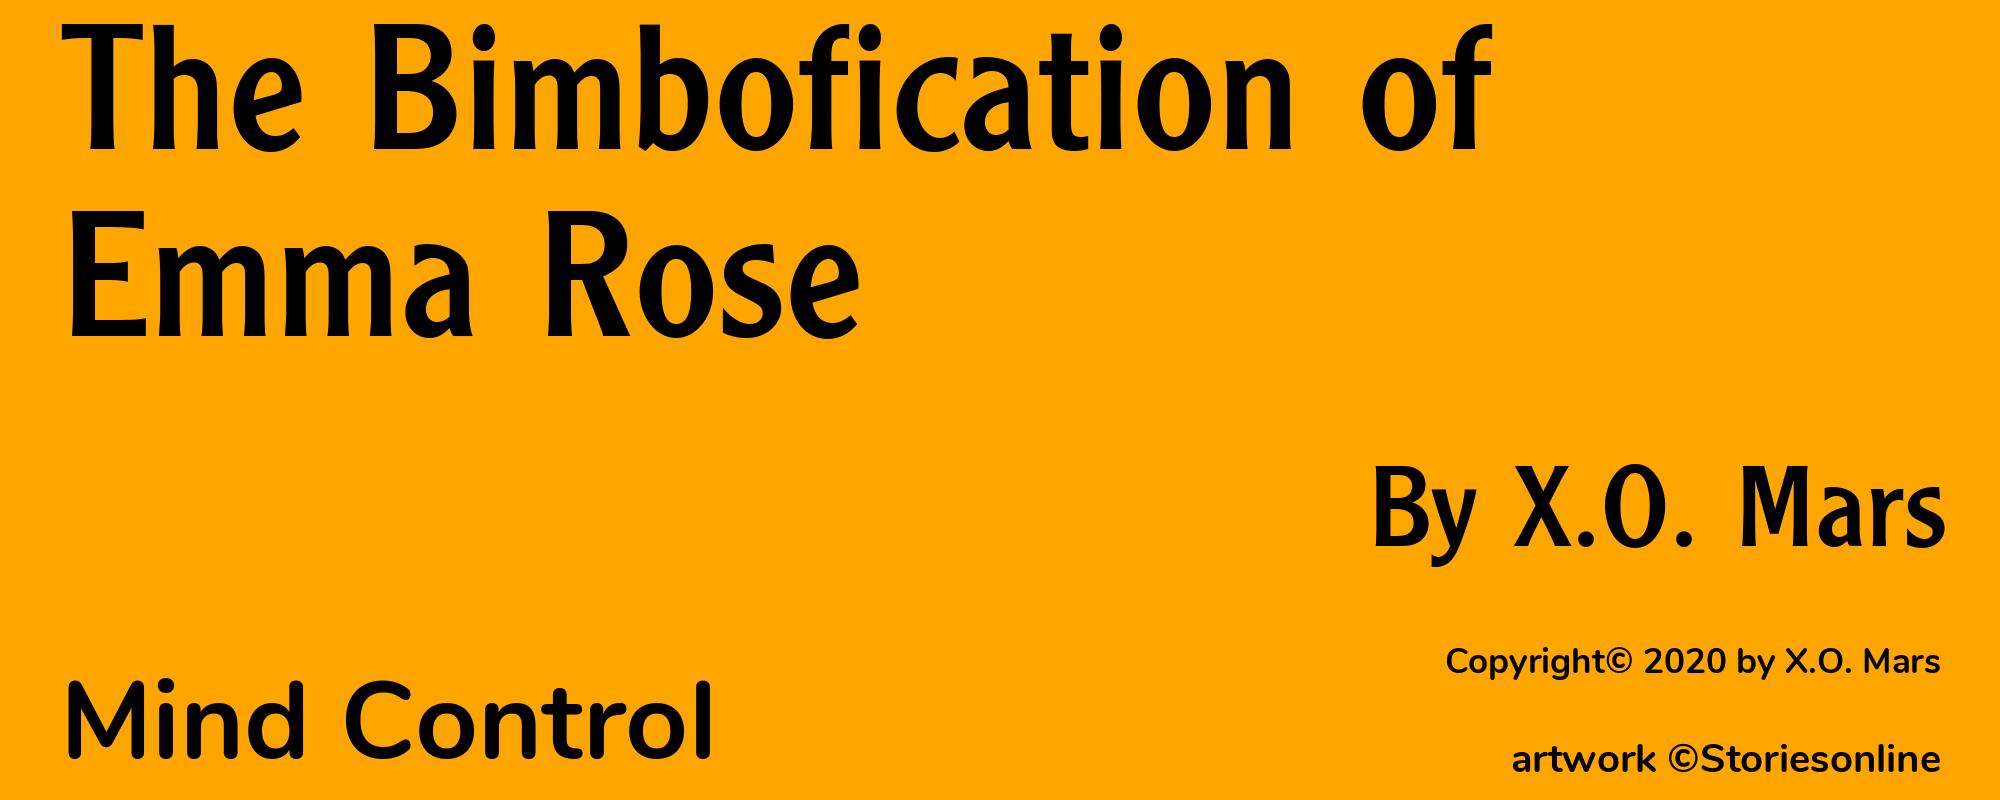 The Bimbofication of Emma Rose - Cover